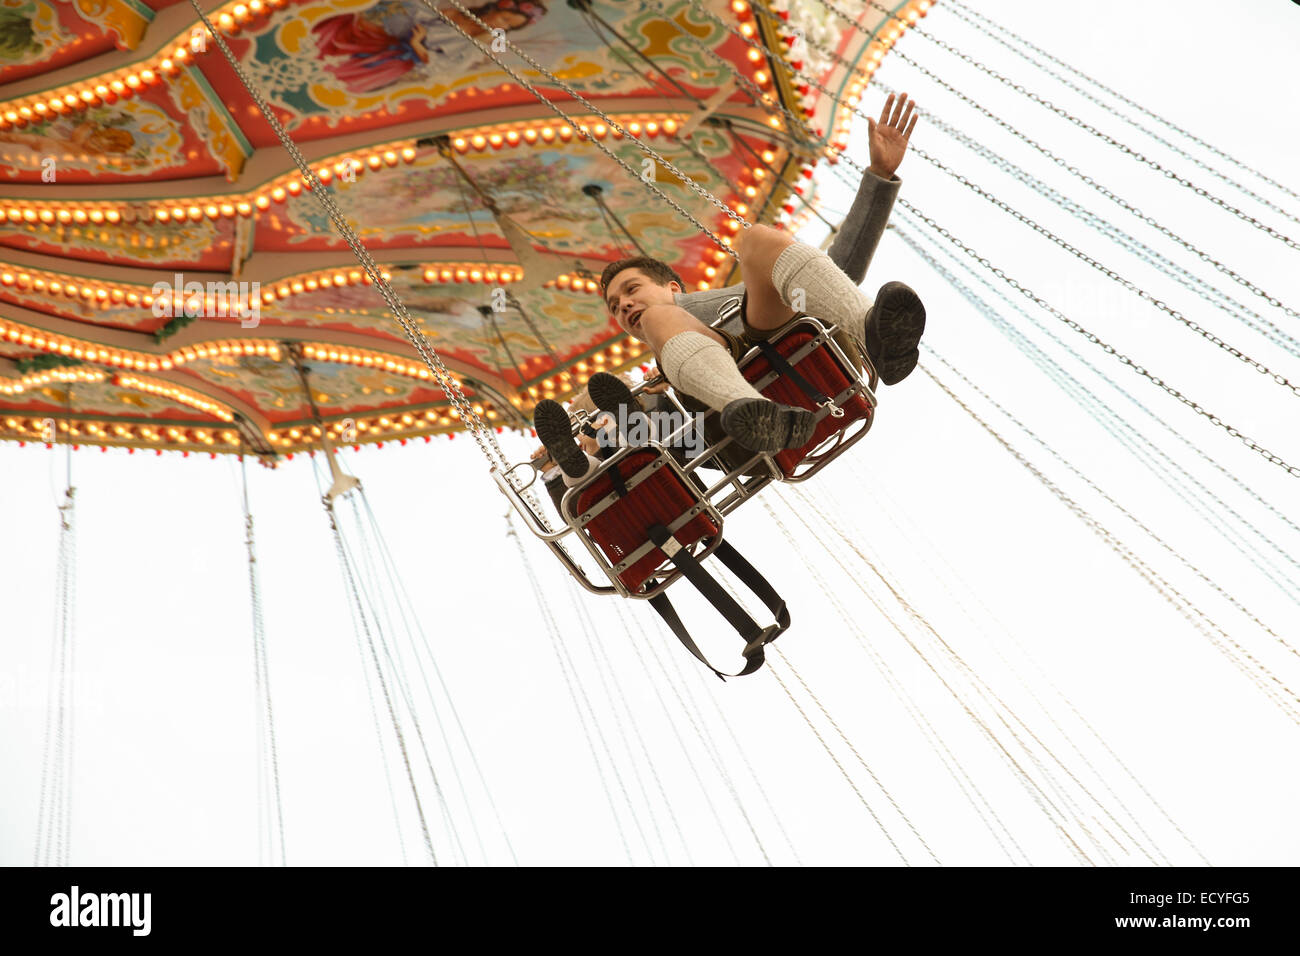 german man boy flying swing chair ride theme park munich oktoberfest Stock Photo